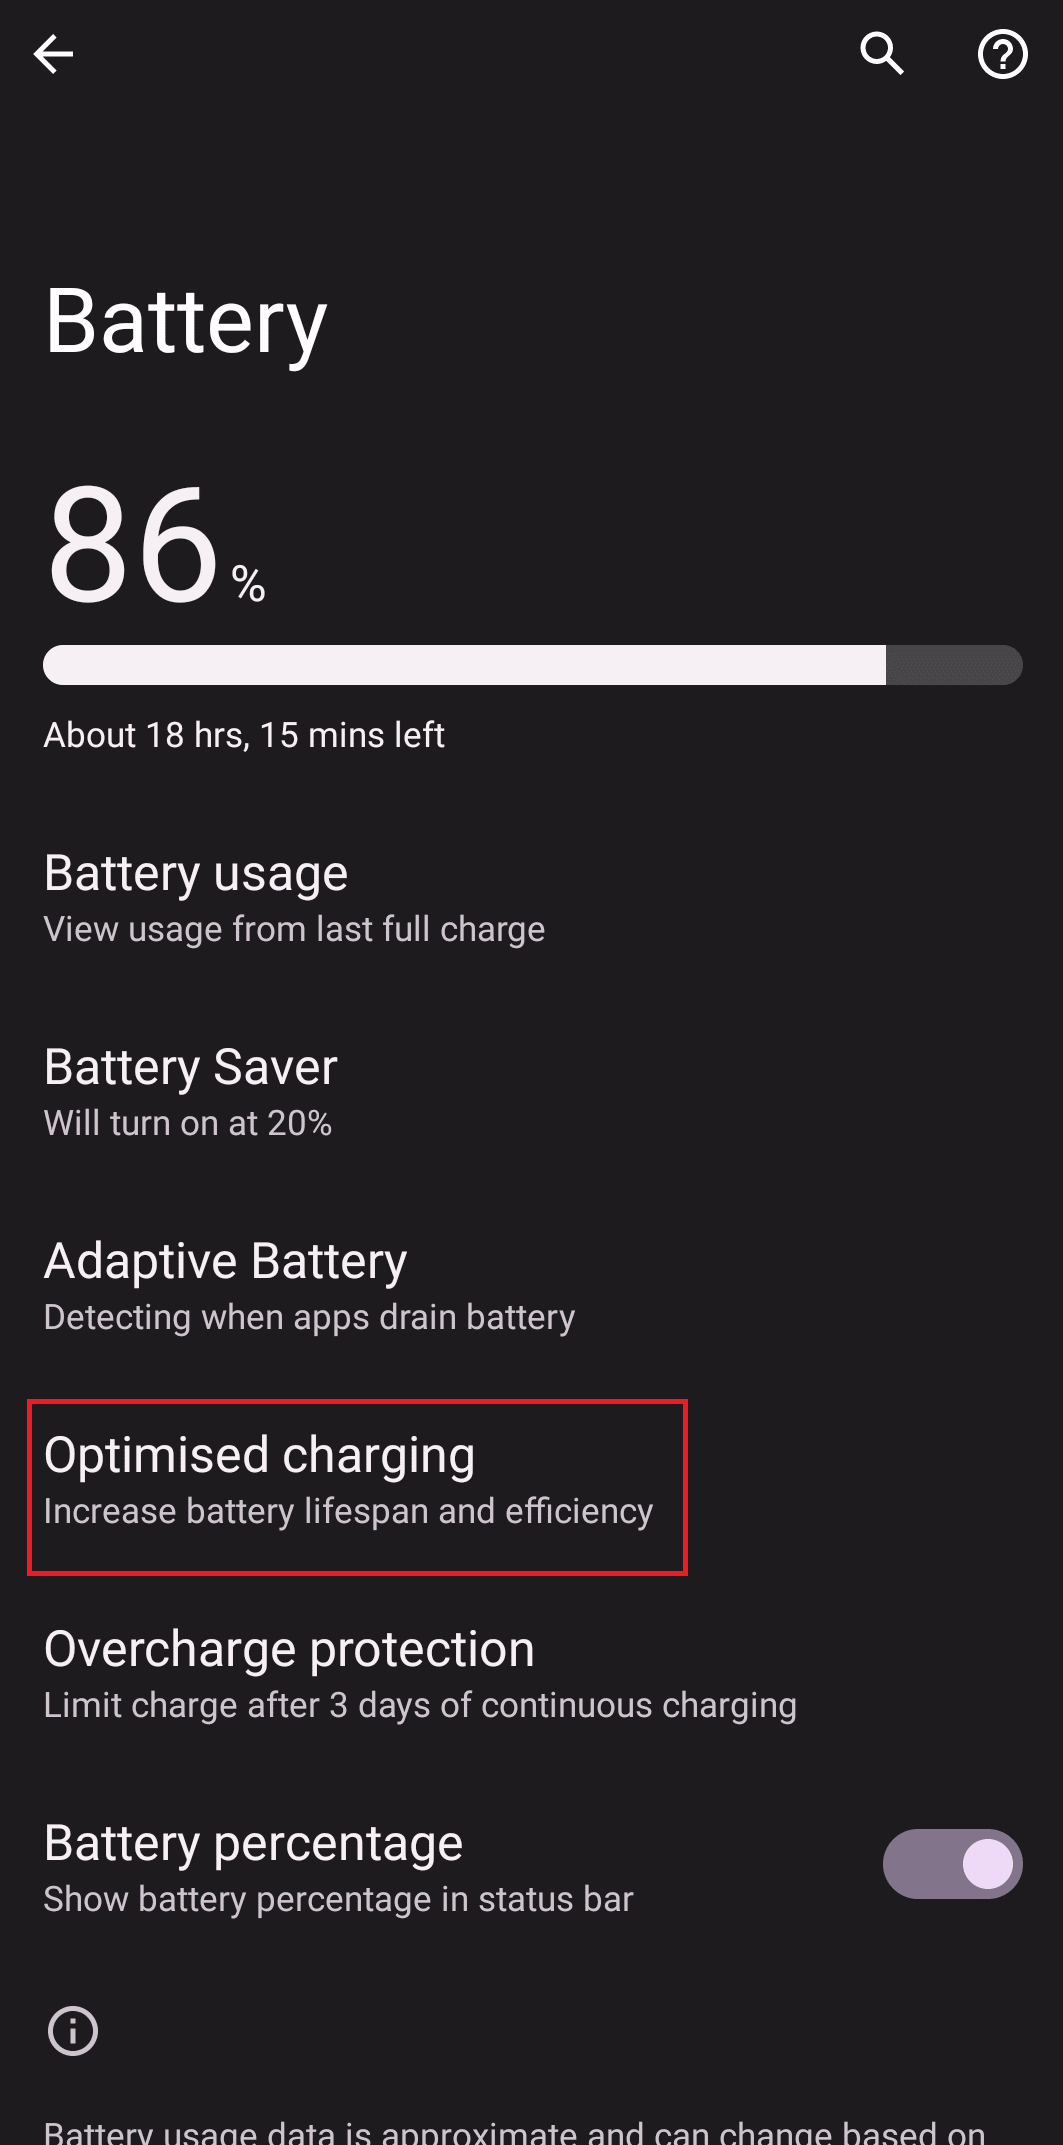 Optimised charging